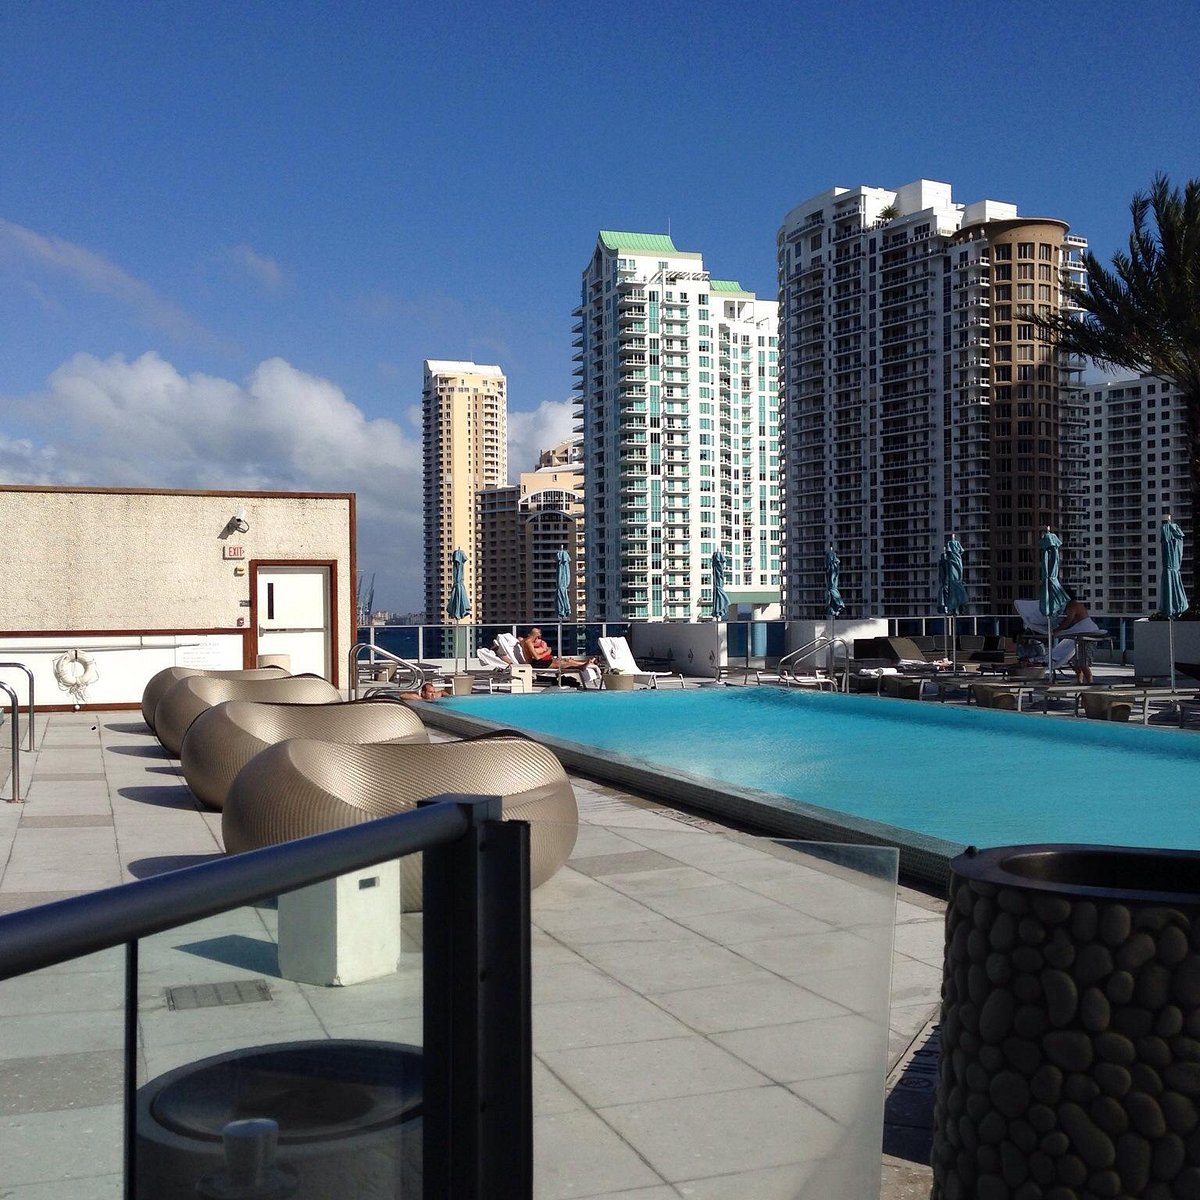 EPIC Hotel Miami Reviews - Miami, FL - 63 Reviews